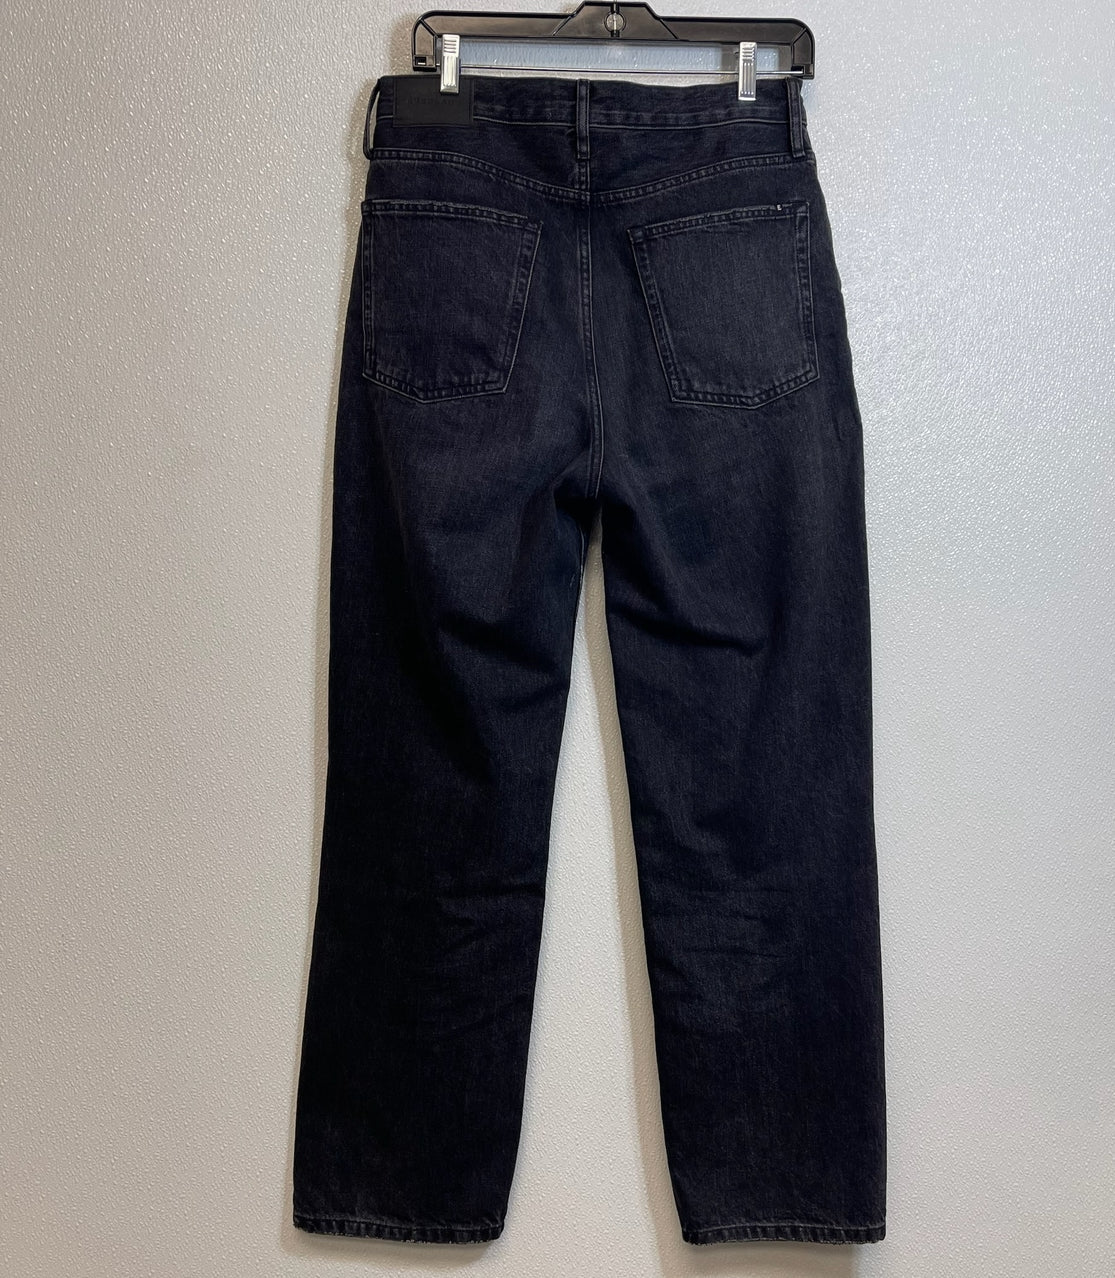 Black Jeans Straight Everlane, Size 6